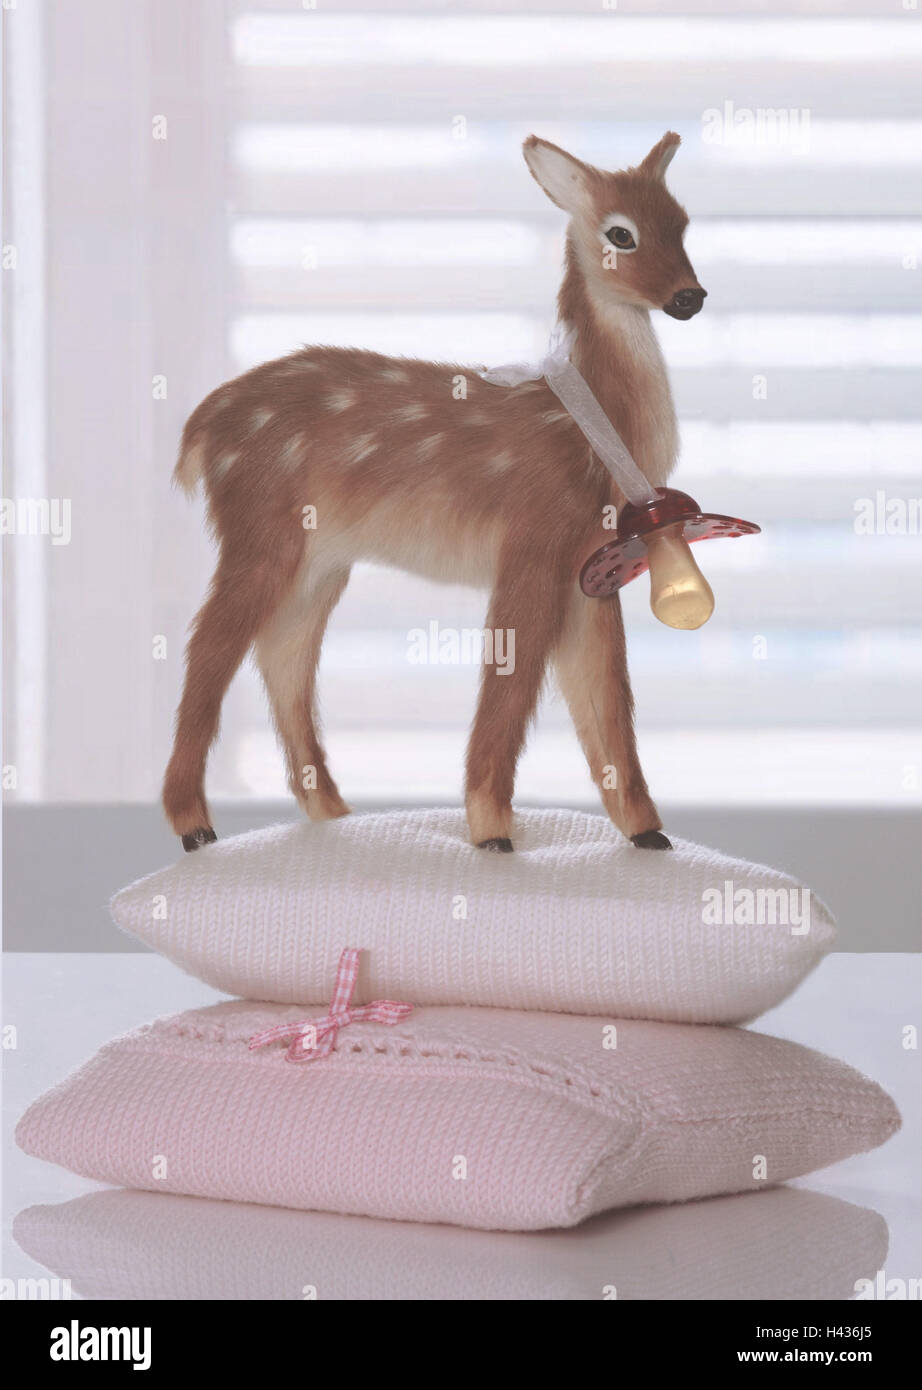 Stilllife, baby utensils, pacifiers, stuffed animal, deer, Stock Photo